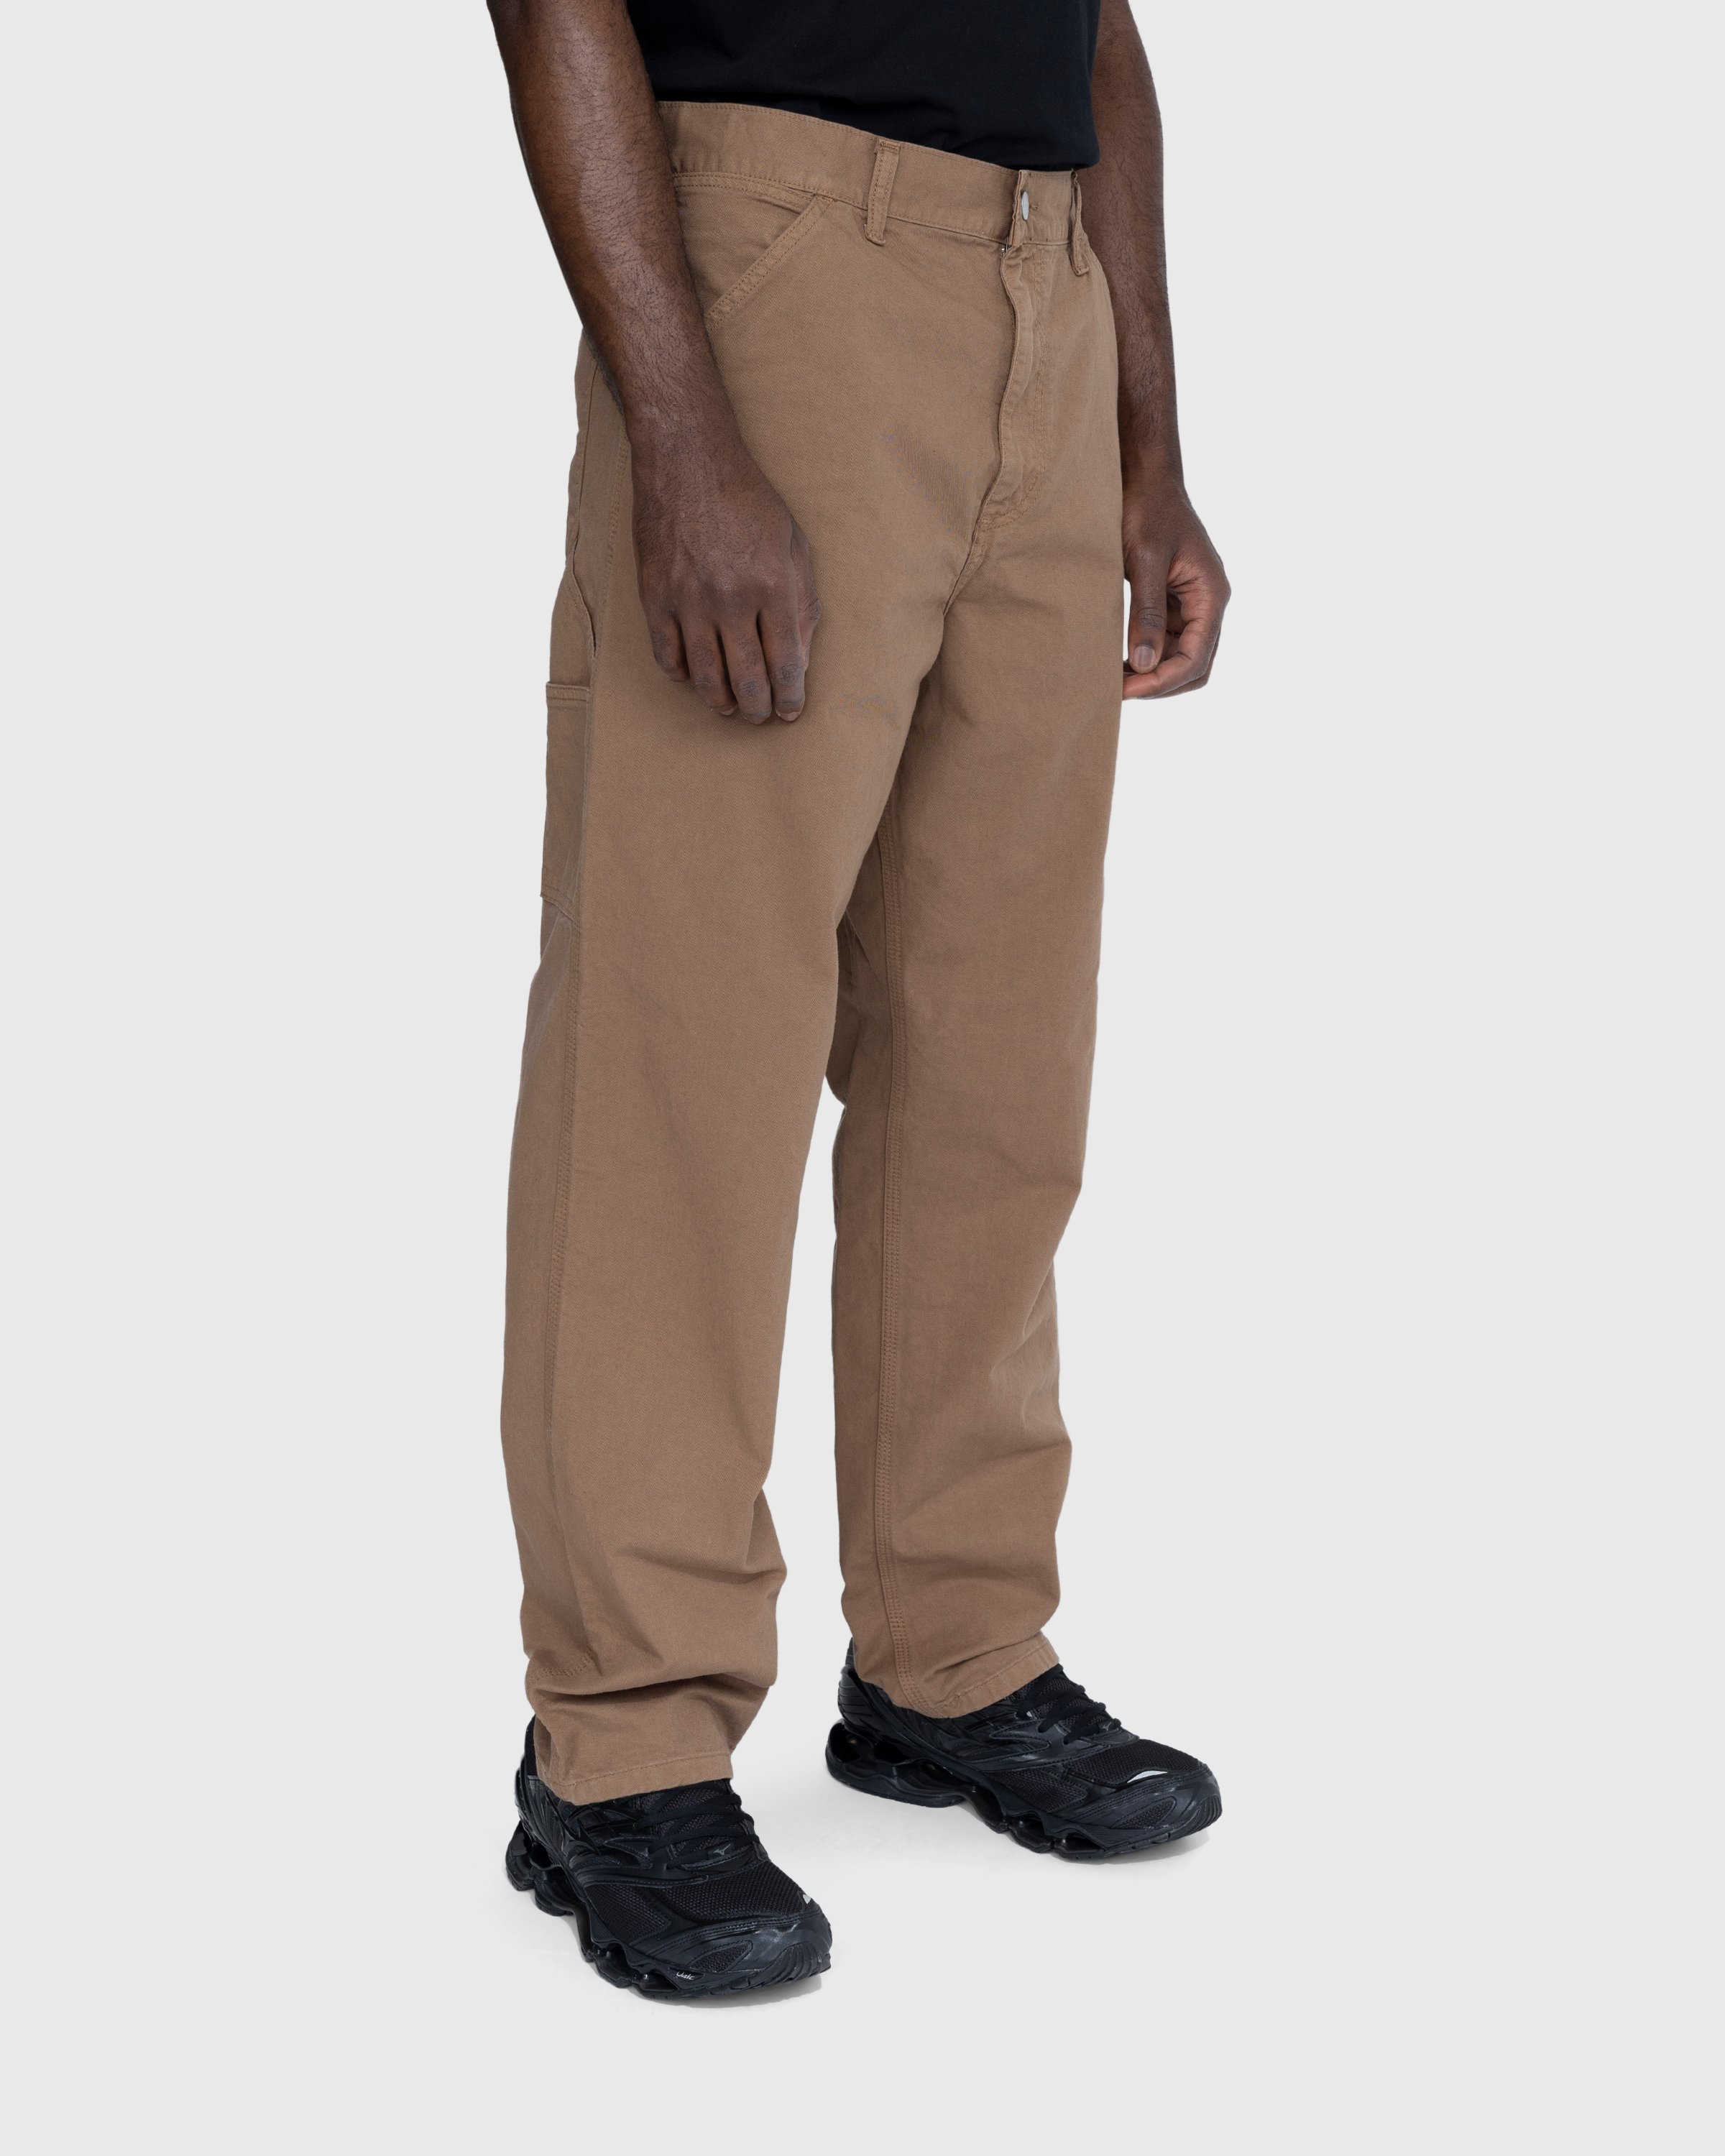 Carhartt WIP - Single Knee Pant Buffalo - Clothing - Brown - Image 4